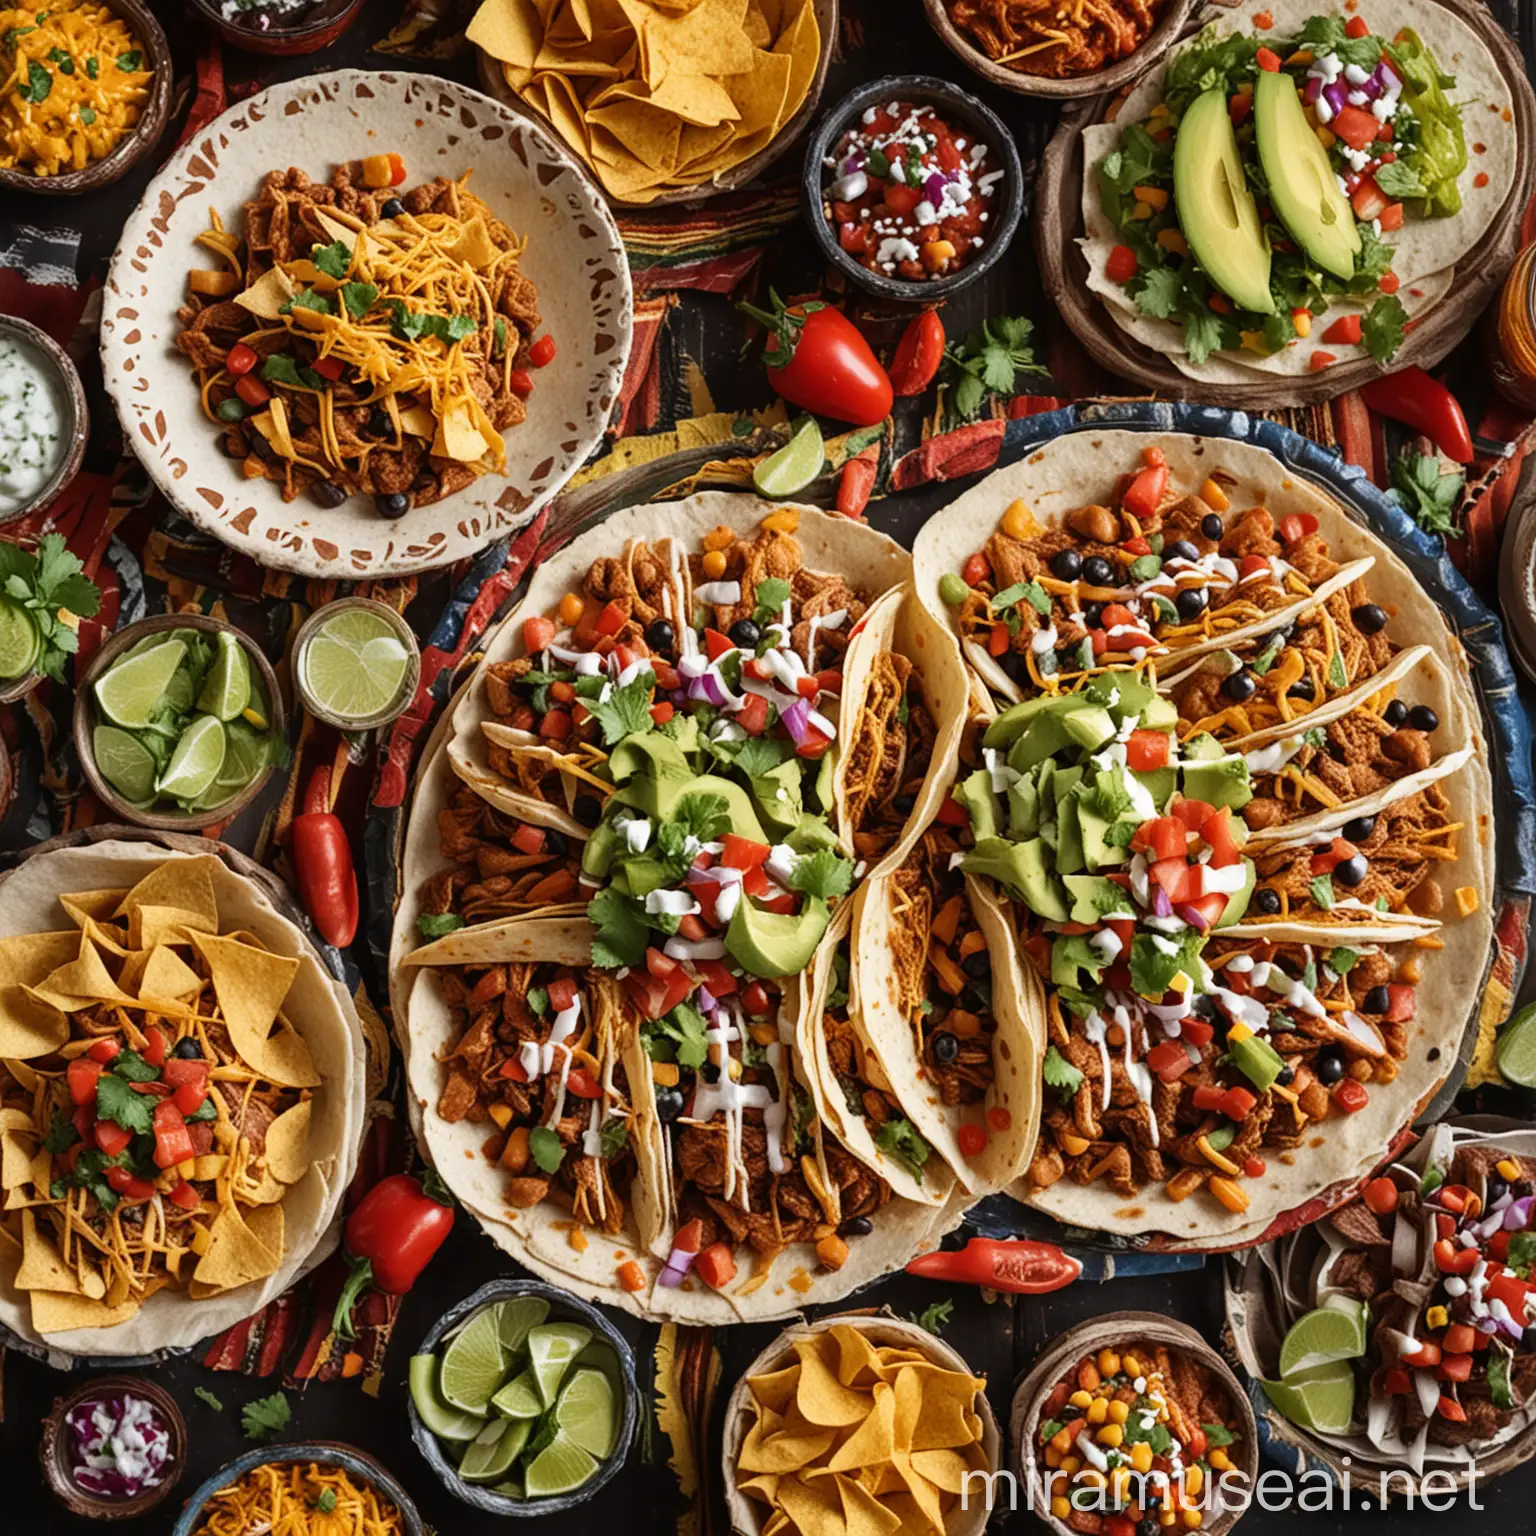 Authentic Mexican Food Spread for Cinco de Mayo Celebration